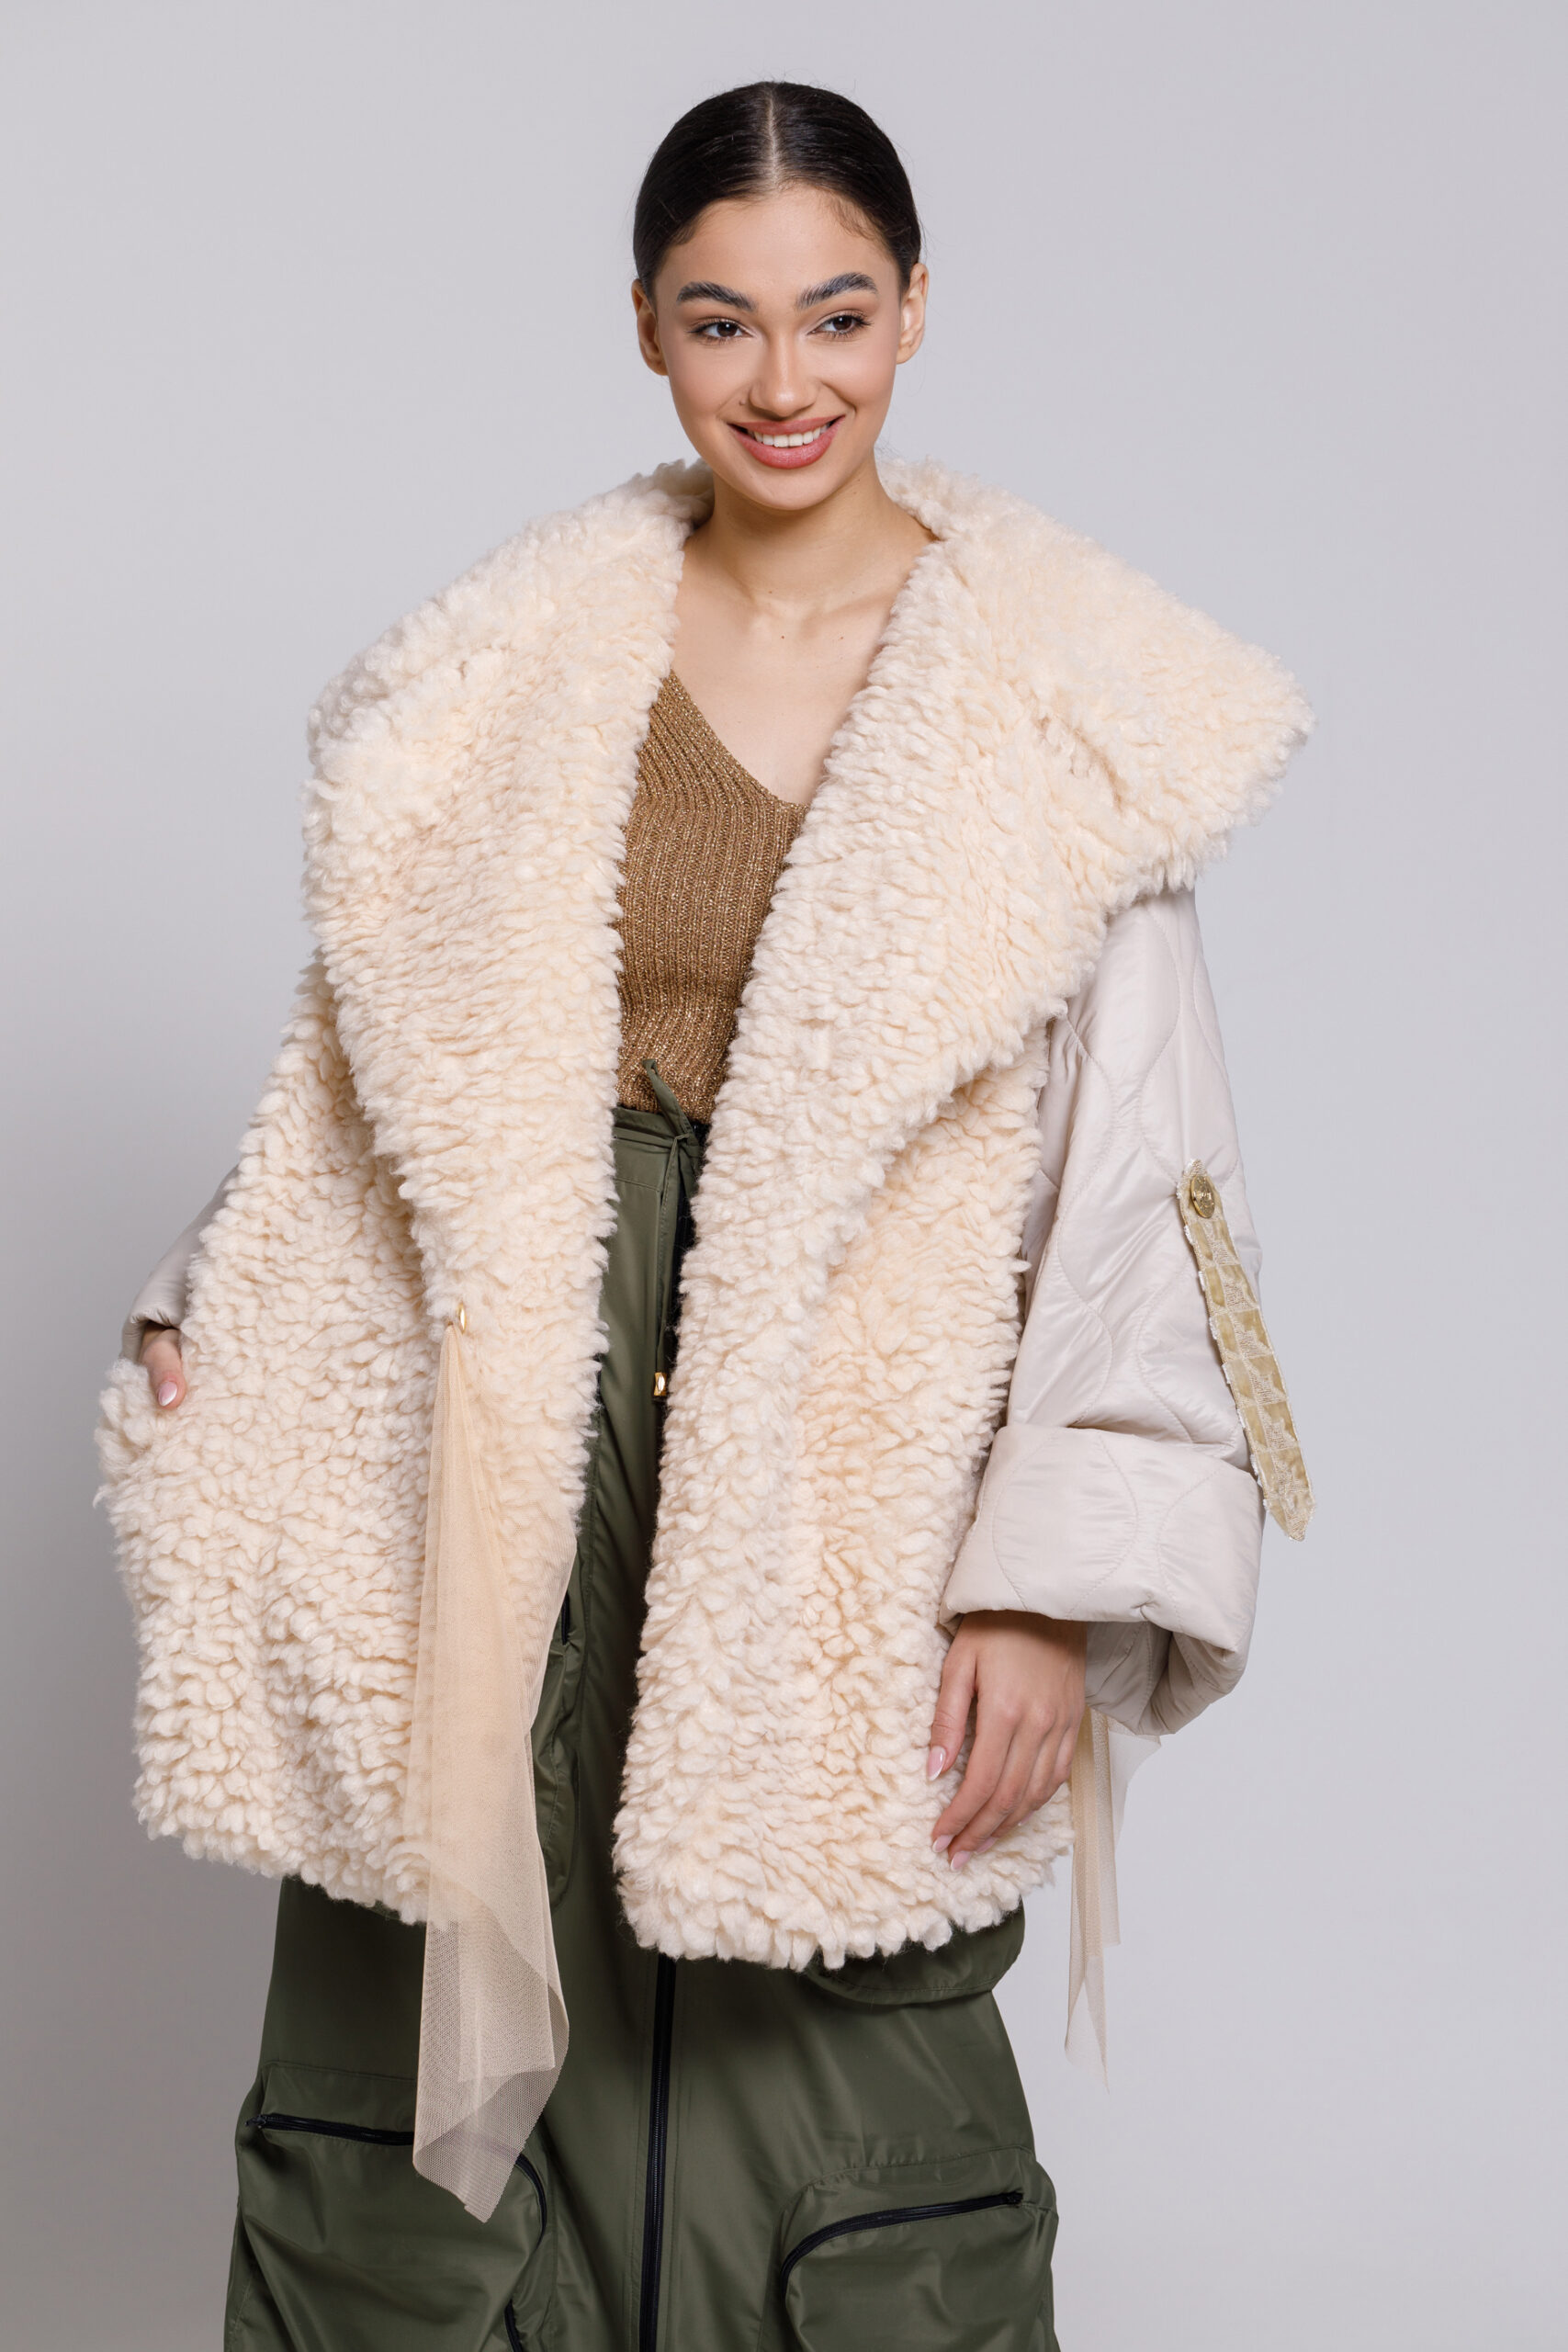 LEDA cream quilted jacket with fur. Natural fabrics, original design, handmade embroidery